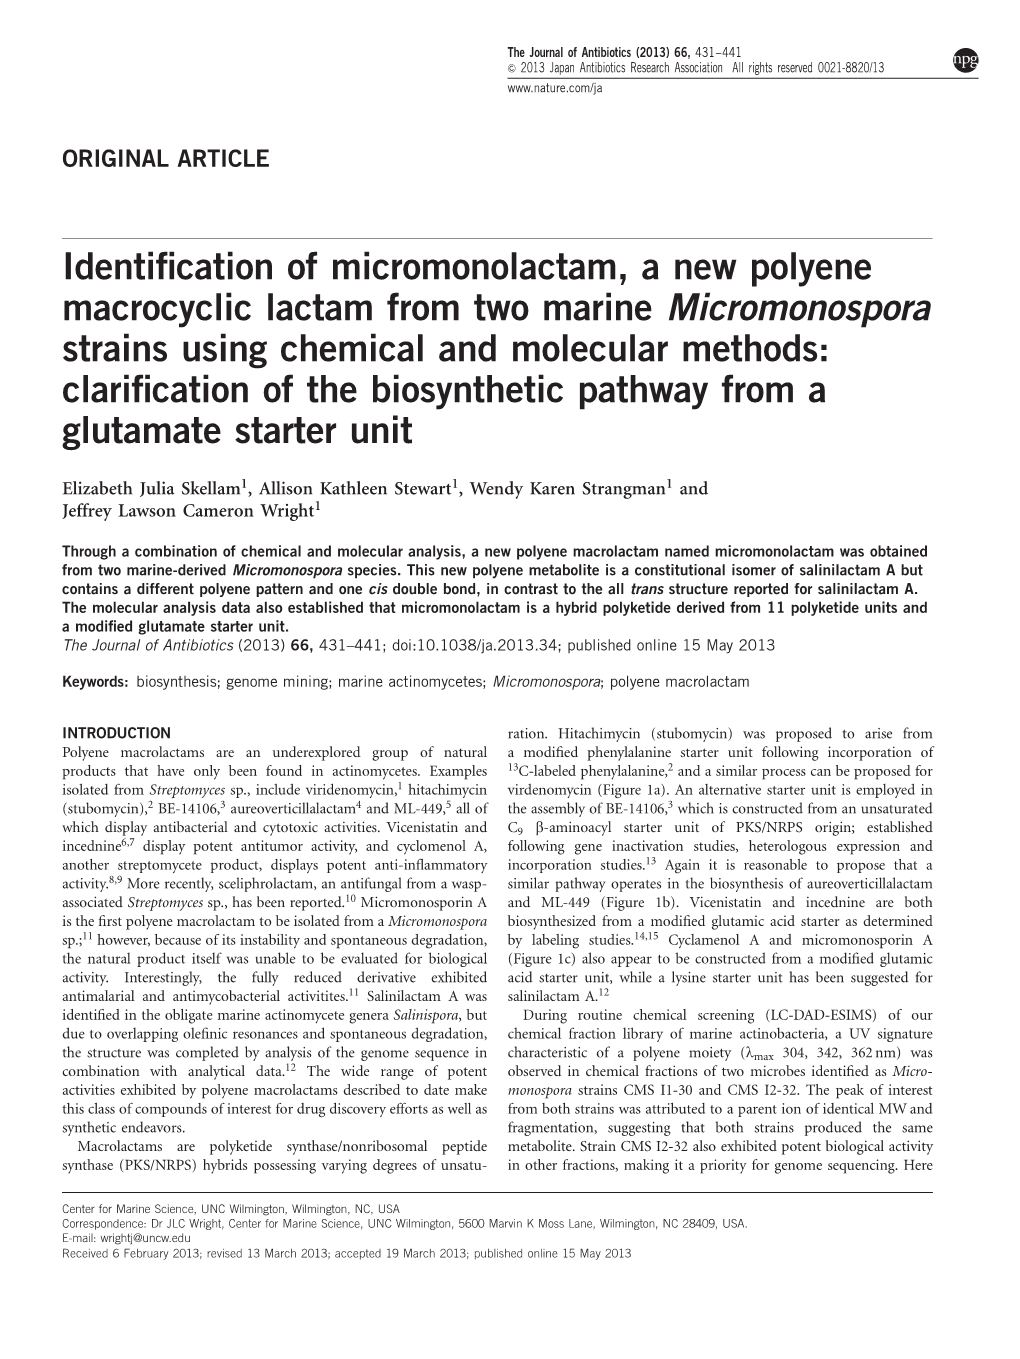 Identification of Micromonolactam, a New Polyene Macrocyclic Lactam